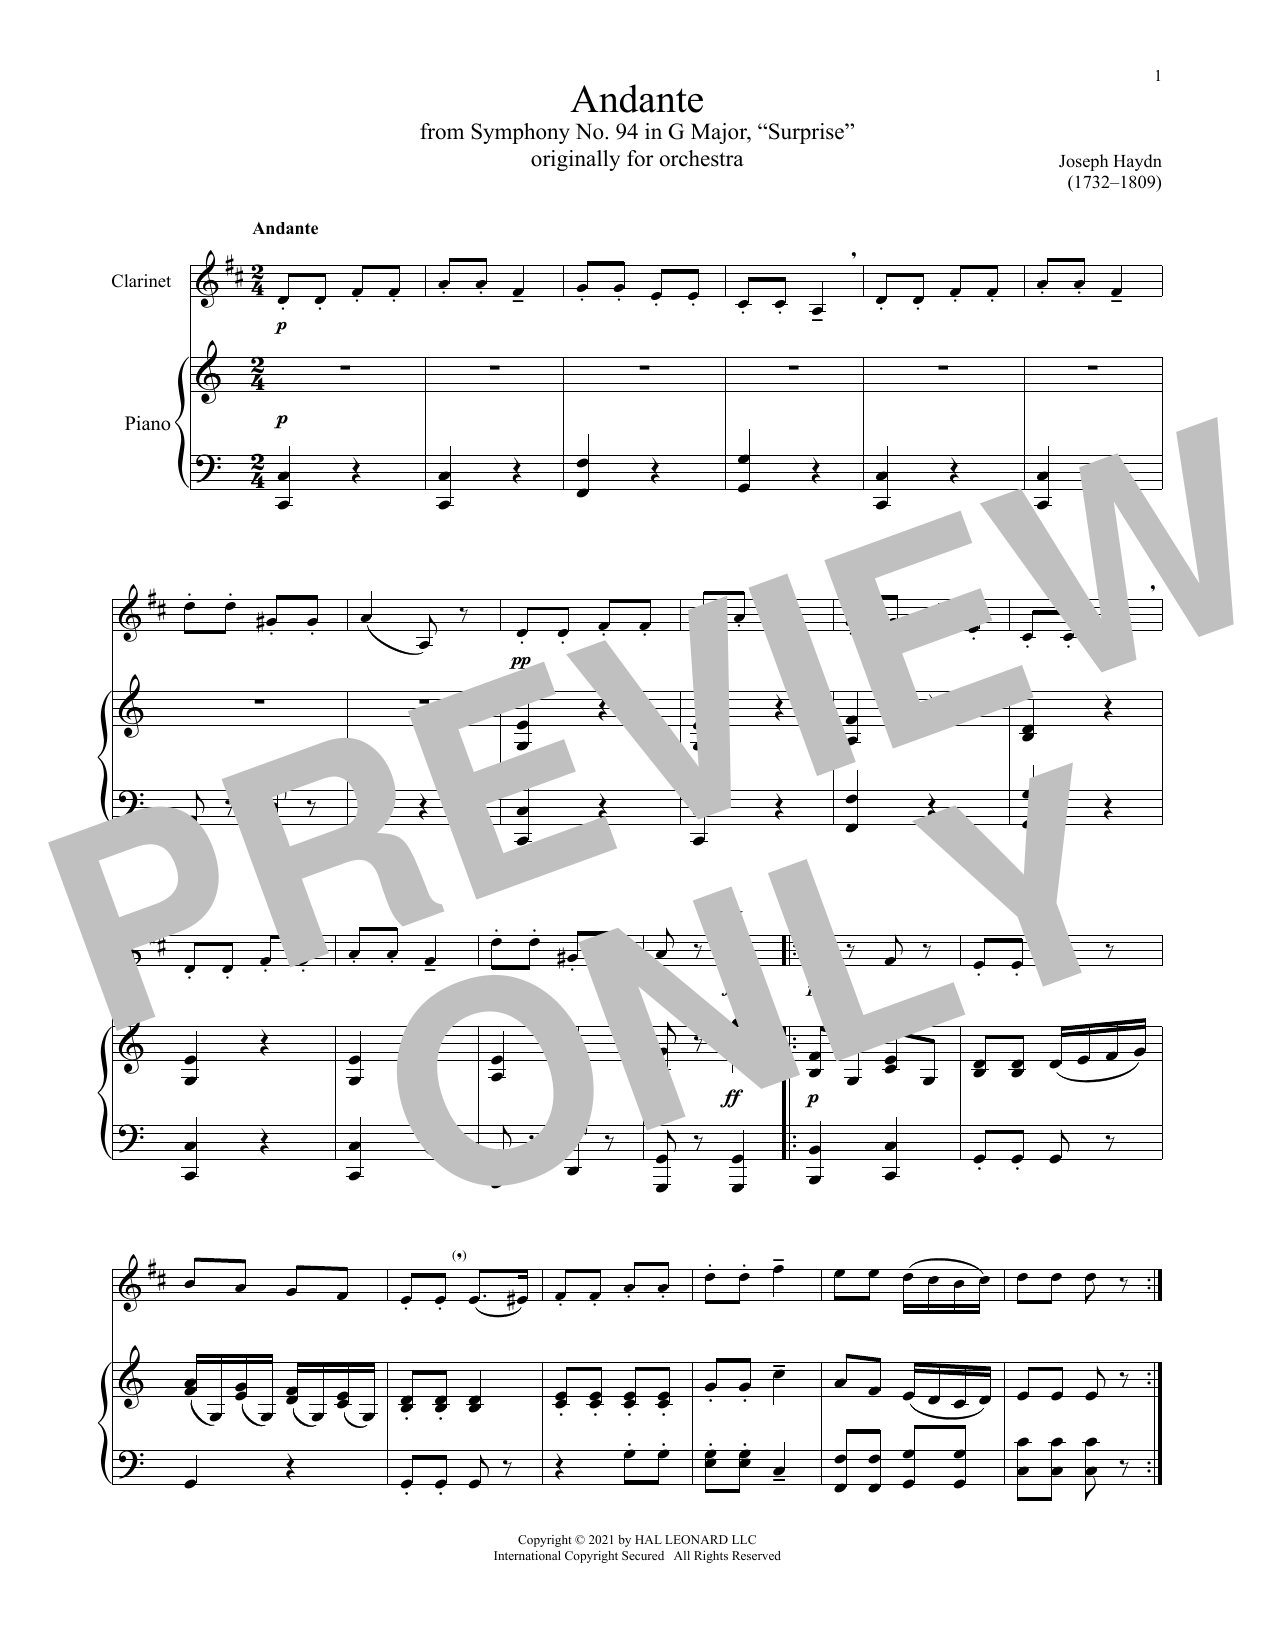 Download Franz Joseph Haydn The Surprise Symphony Sheet Music